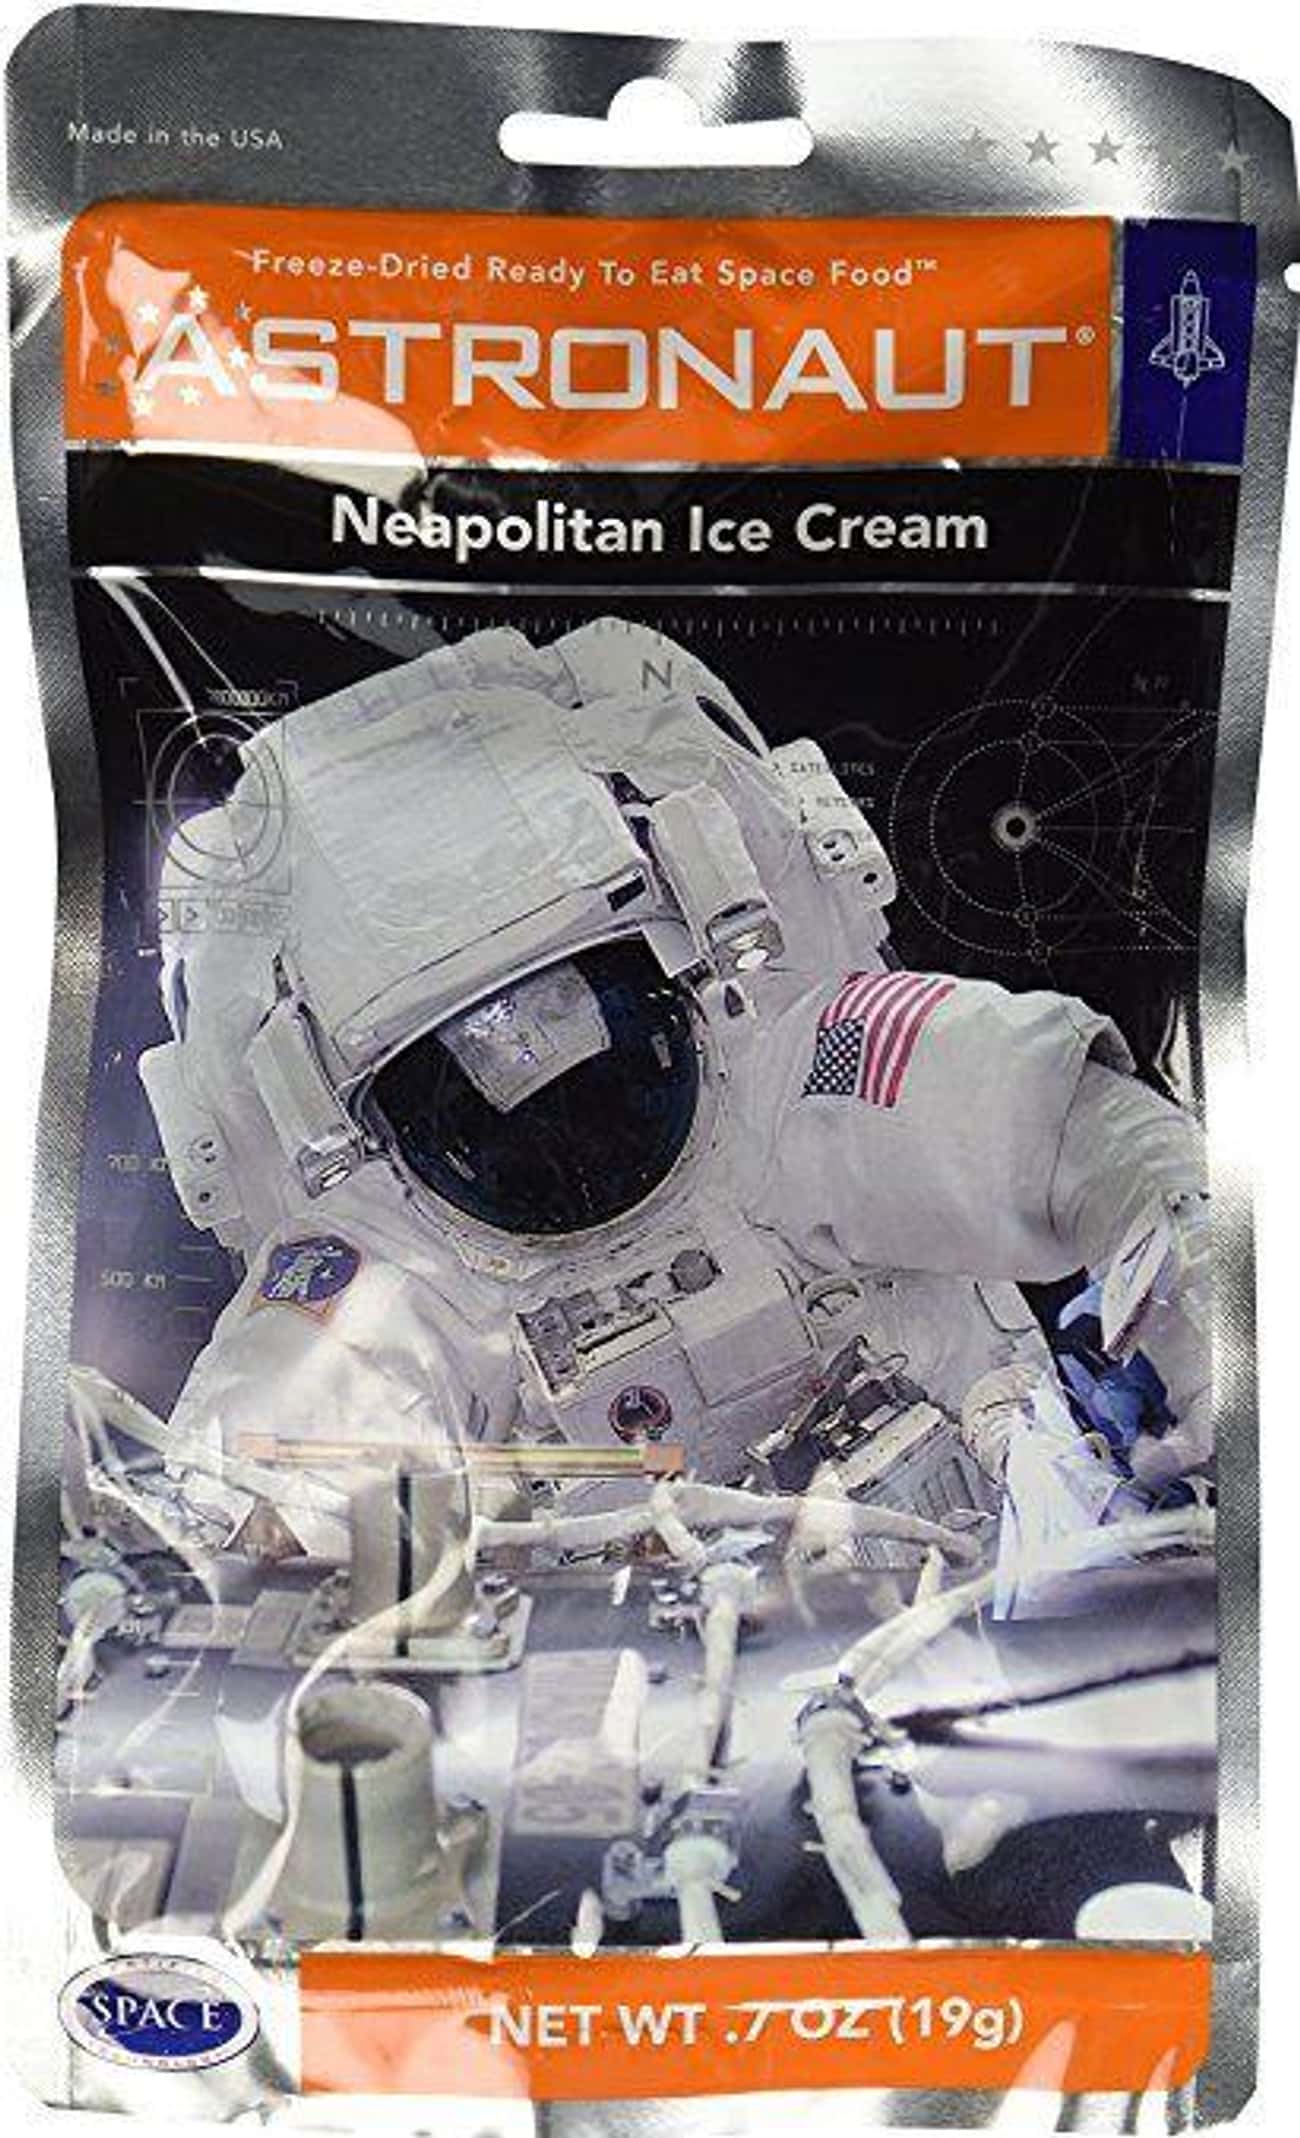 Astronaut Neapolitan Ice Cream